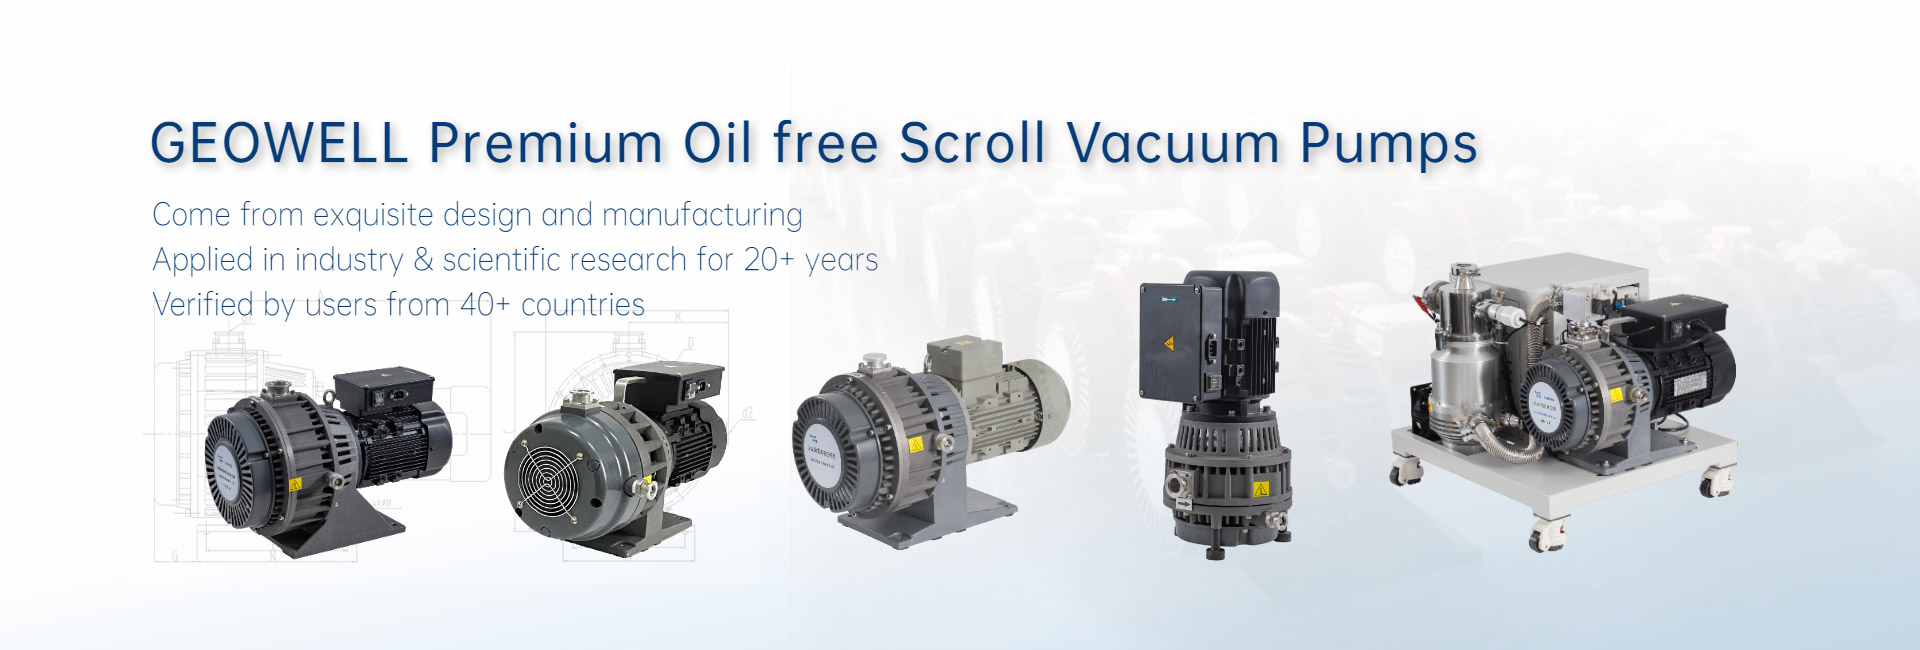 Oil free scroll vacuum pumps